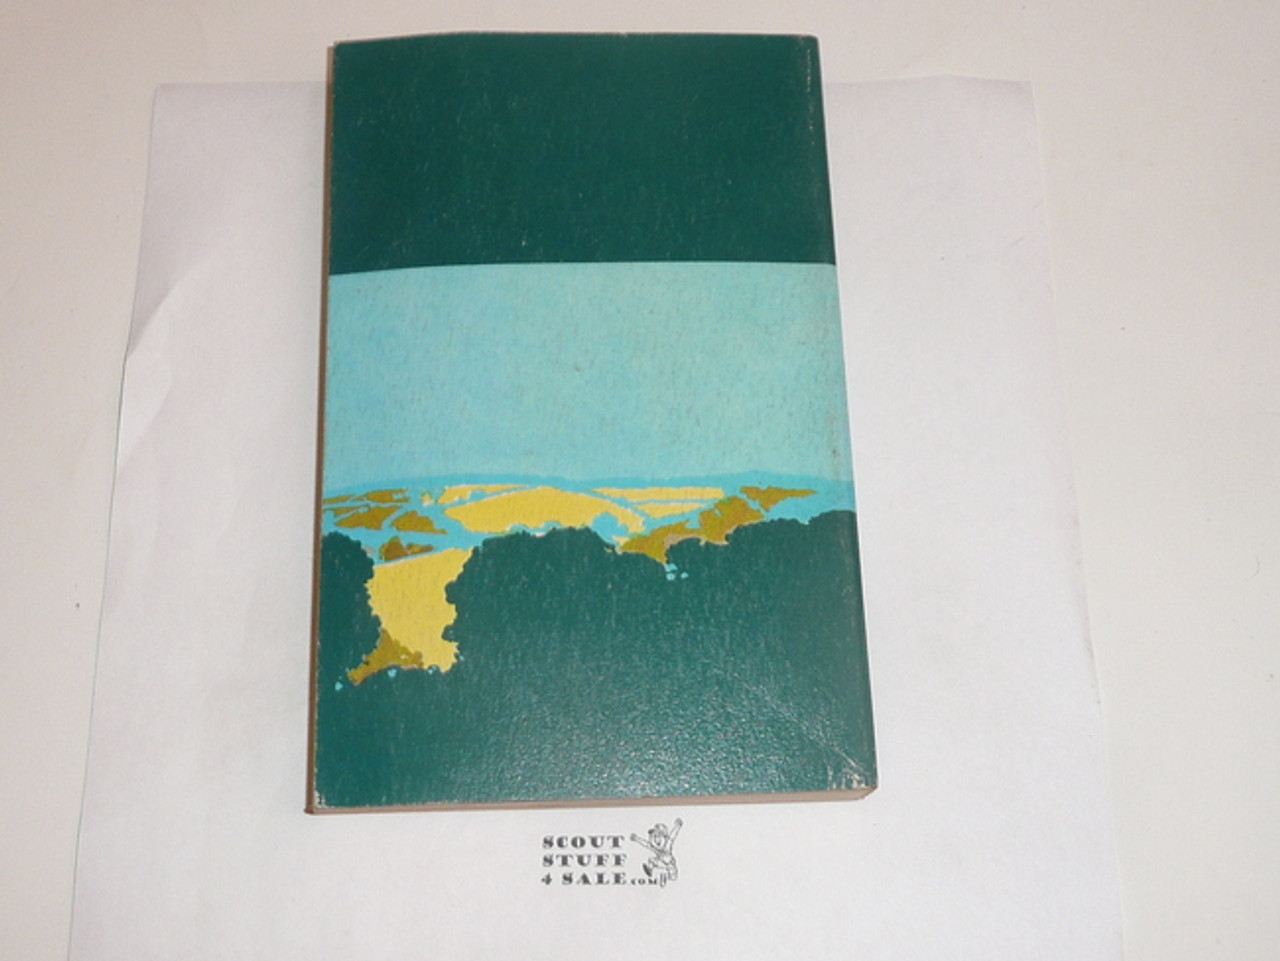 1961 Handbook For Patrol Leaders,  World Brotherhood (Second) Edition, MINT Condition